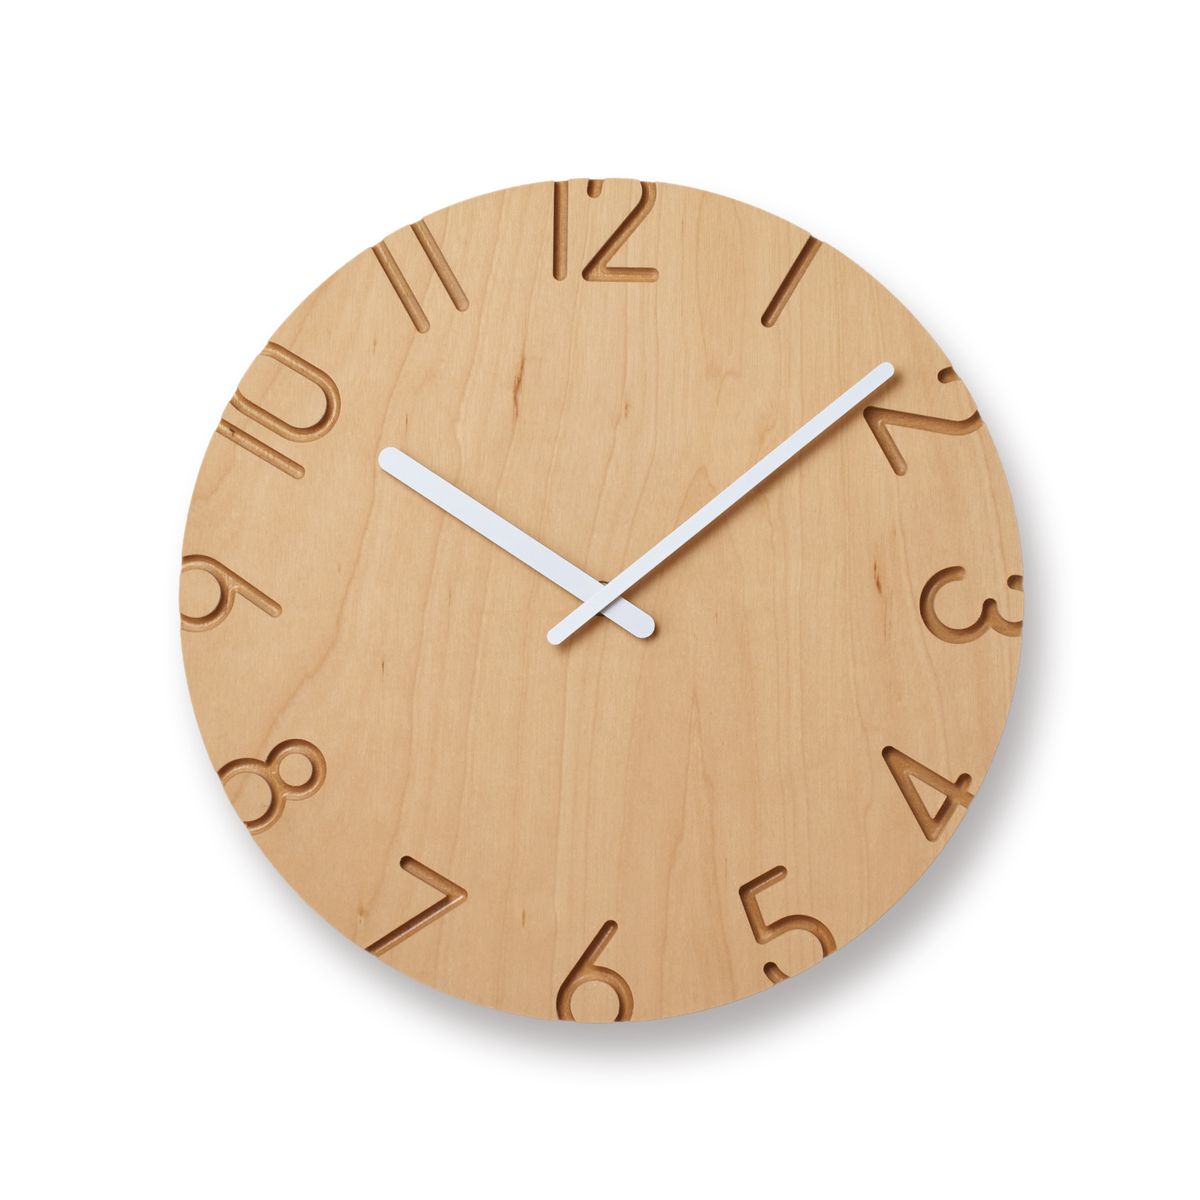 Carved Birch L Clock by Lemnos